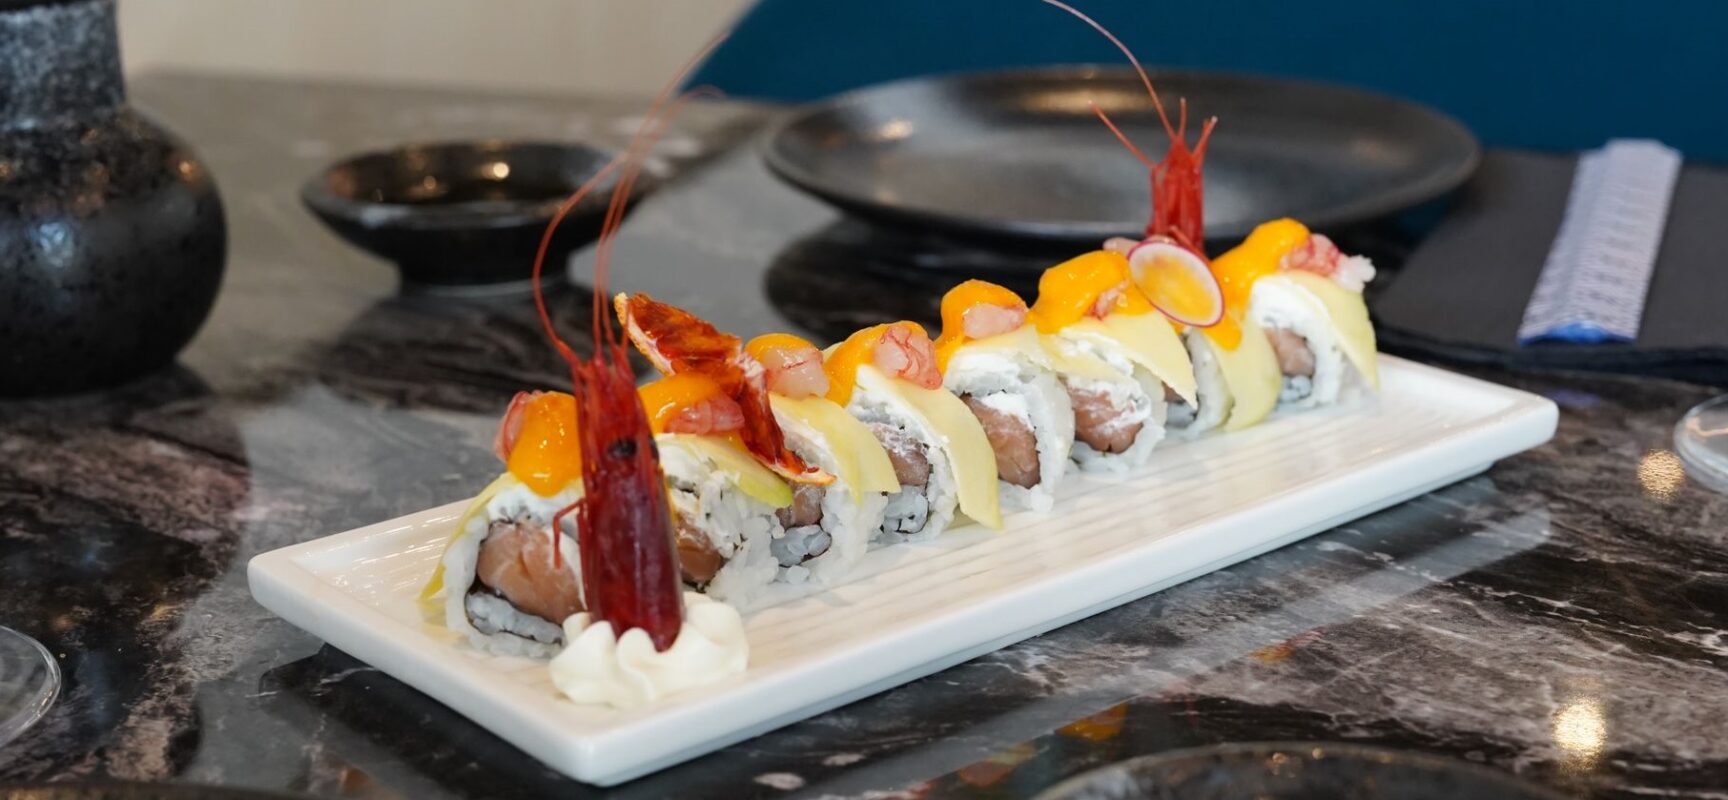 Arriva a Bisceglie “Sakana Sushi”, tipicità e golosità della cucina giapponese / FOTO